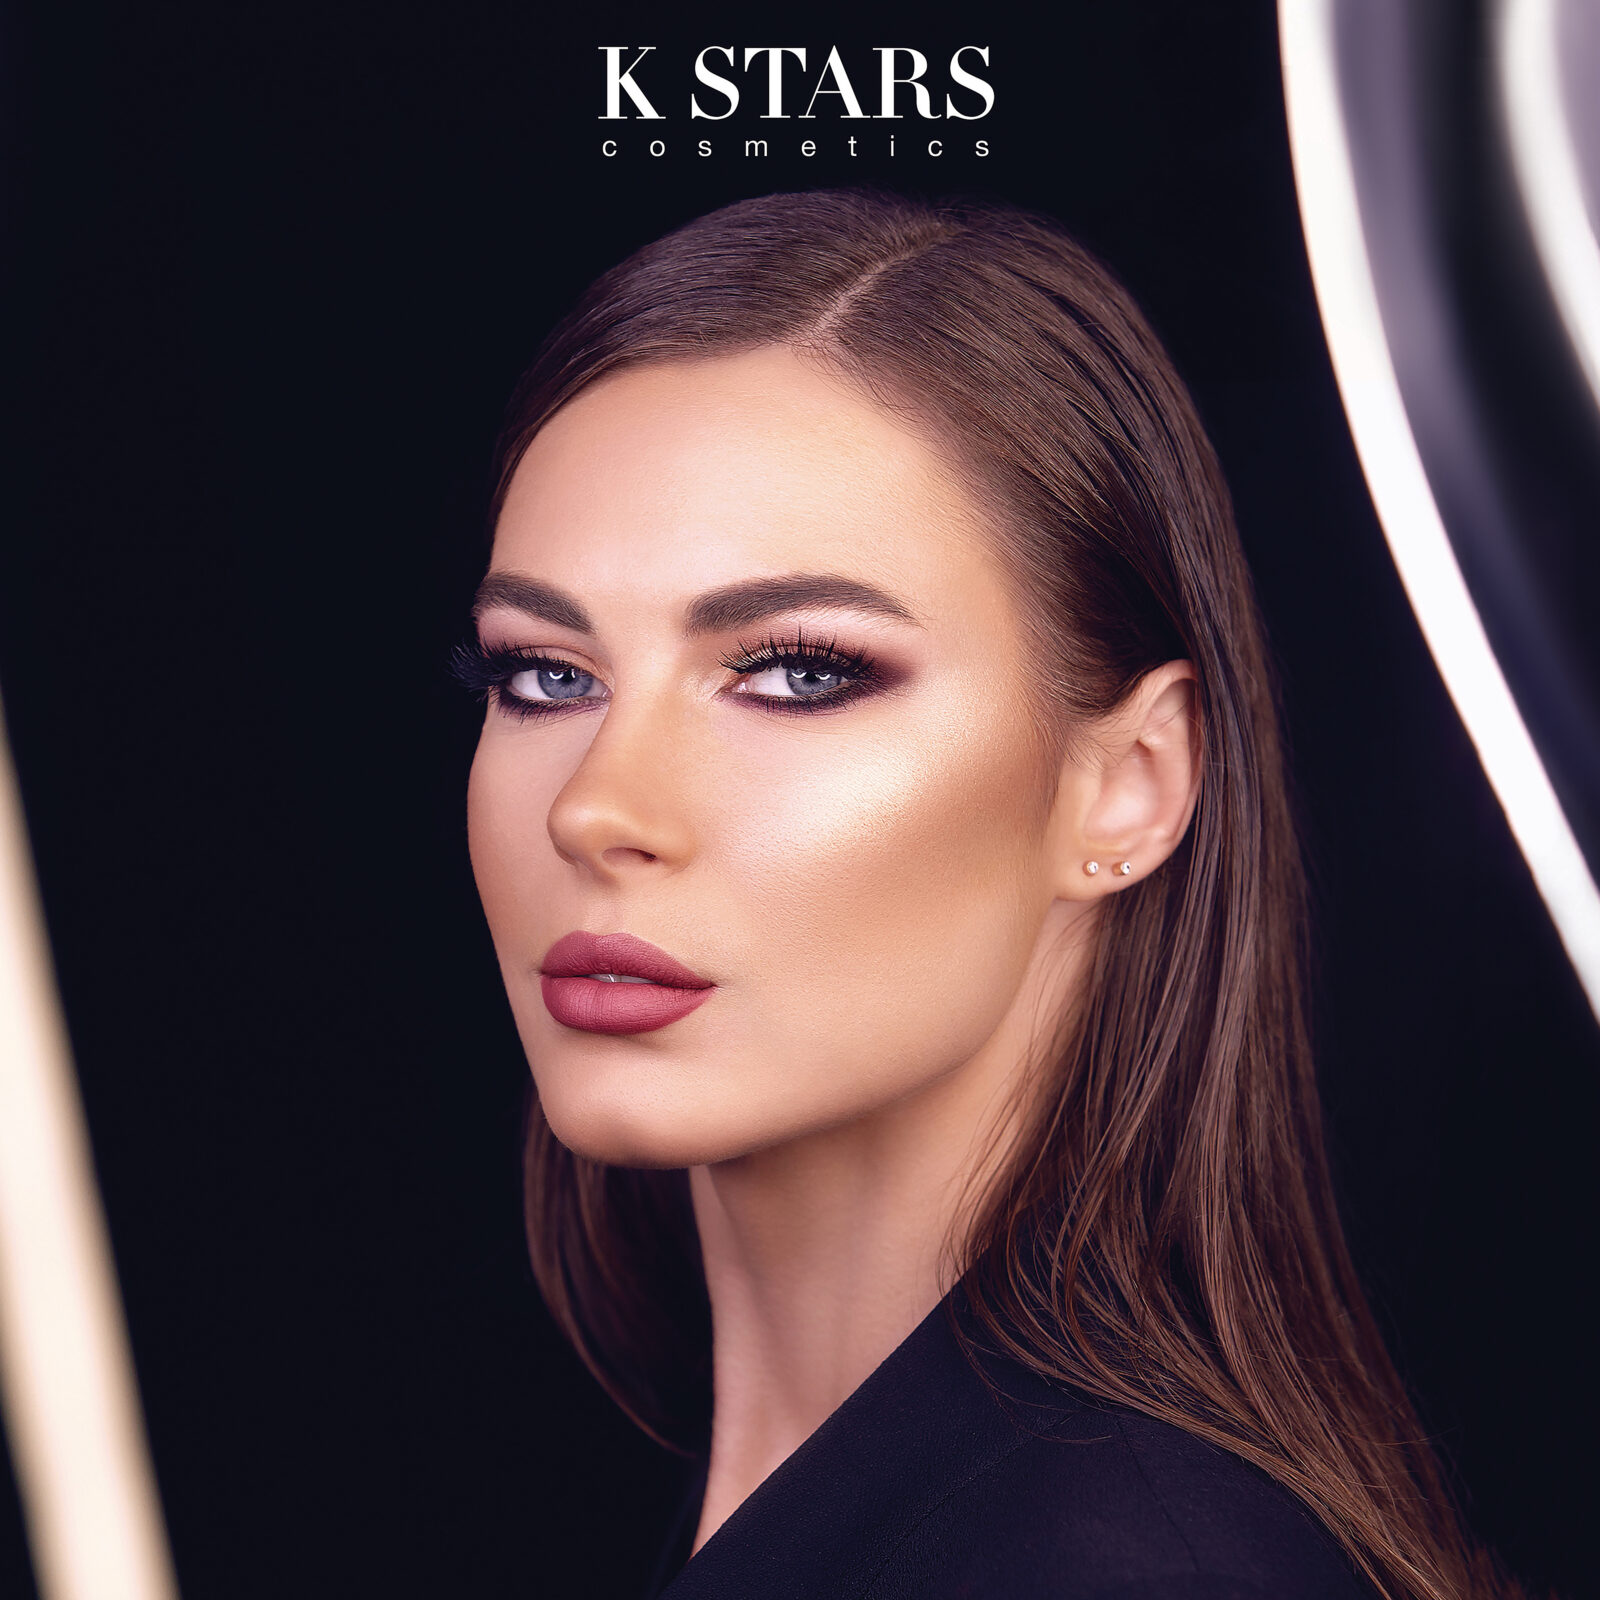 Kstars Cosmetics